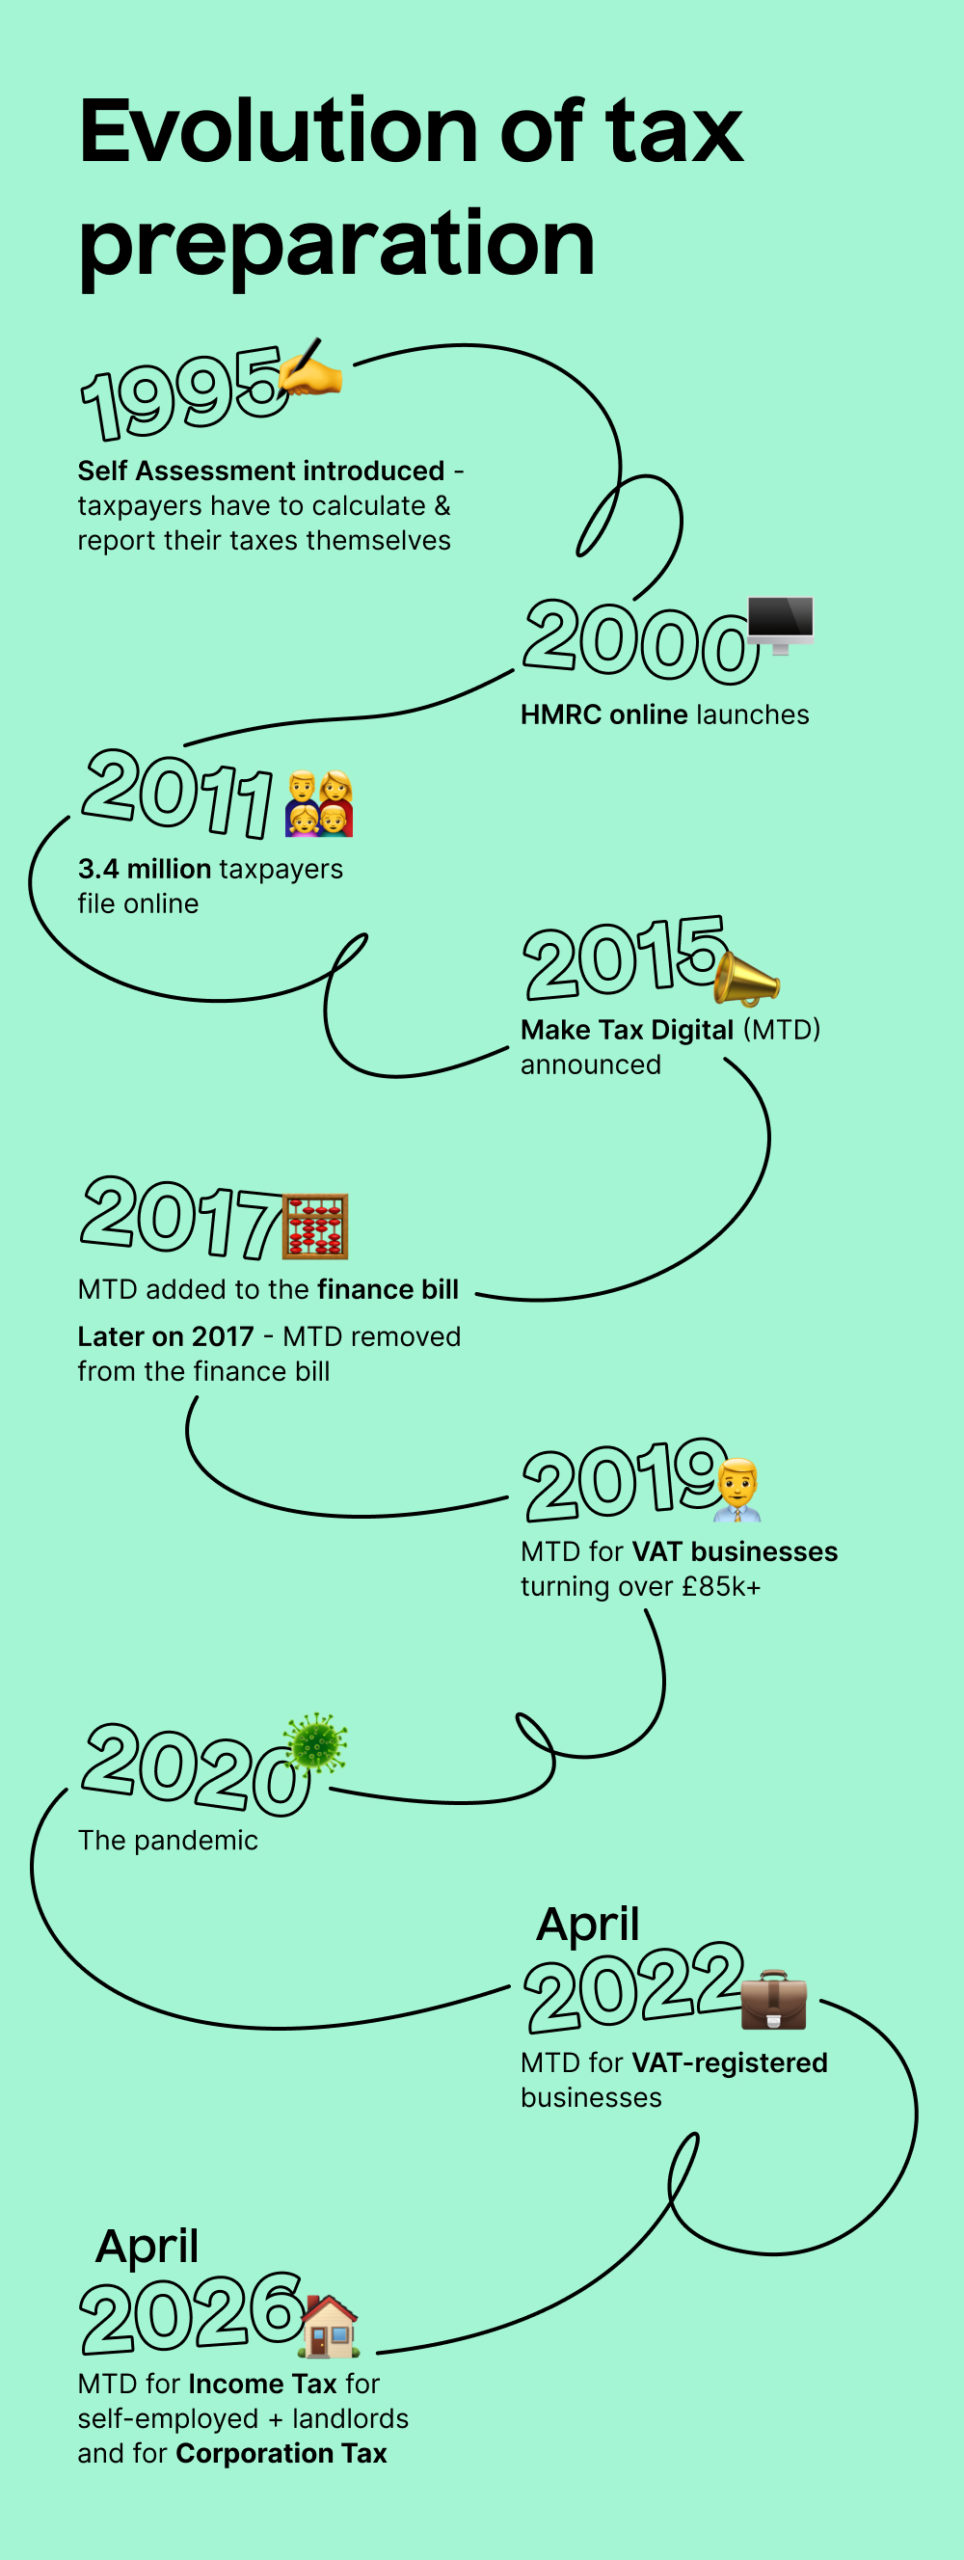 Evolution of tax preparation